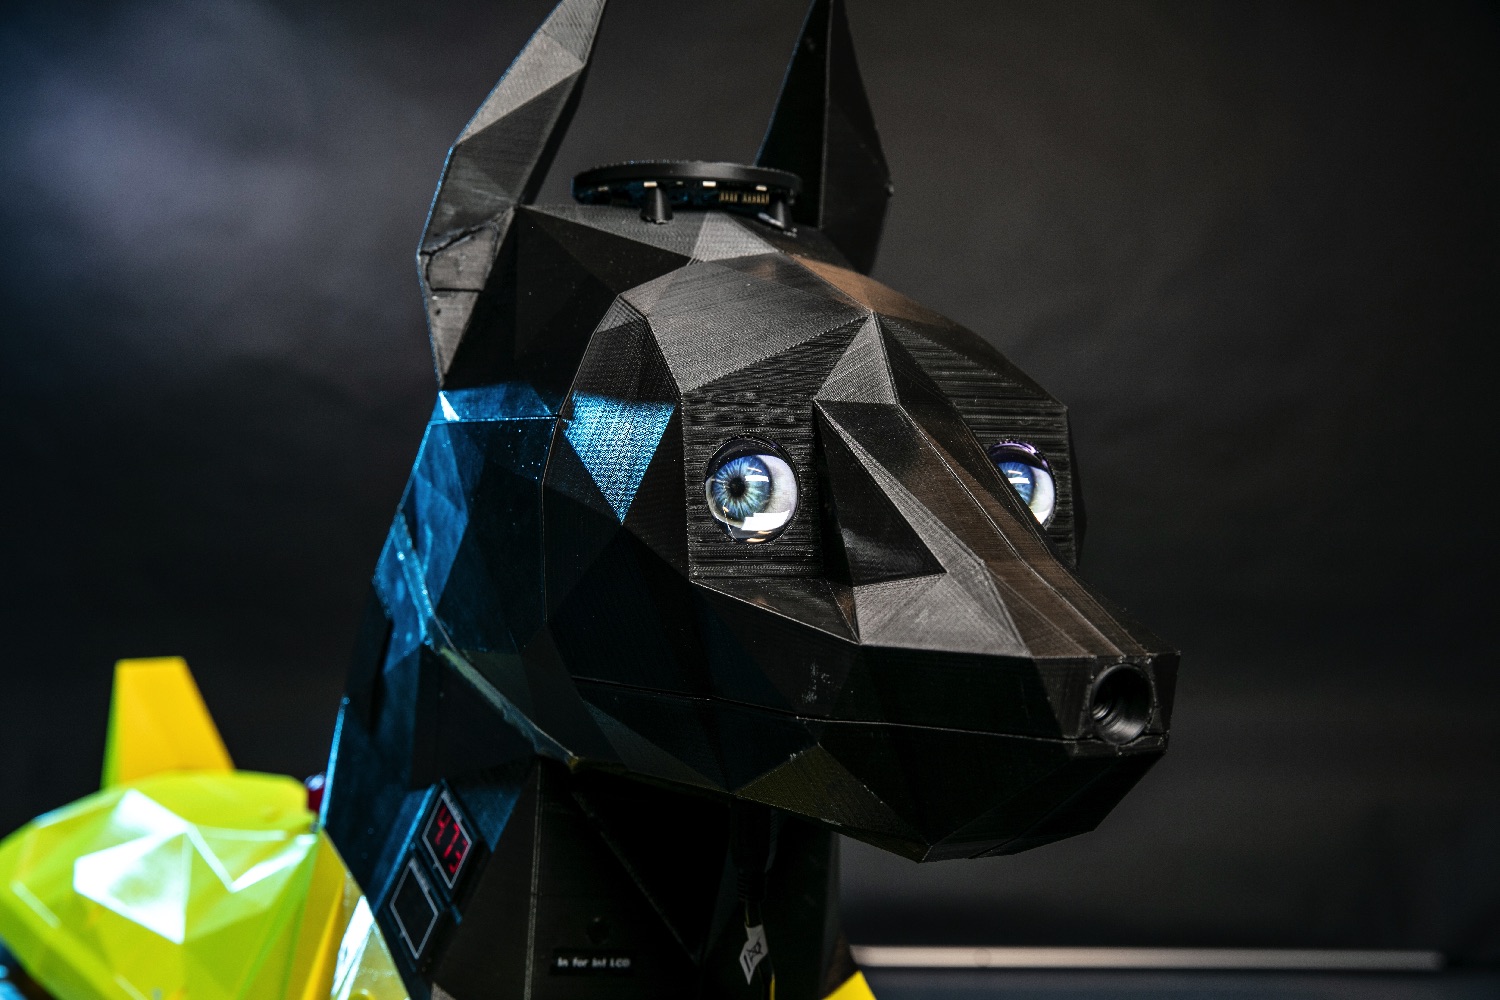 astro dog robot image 2